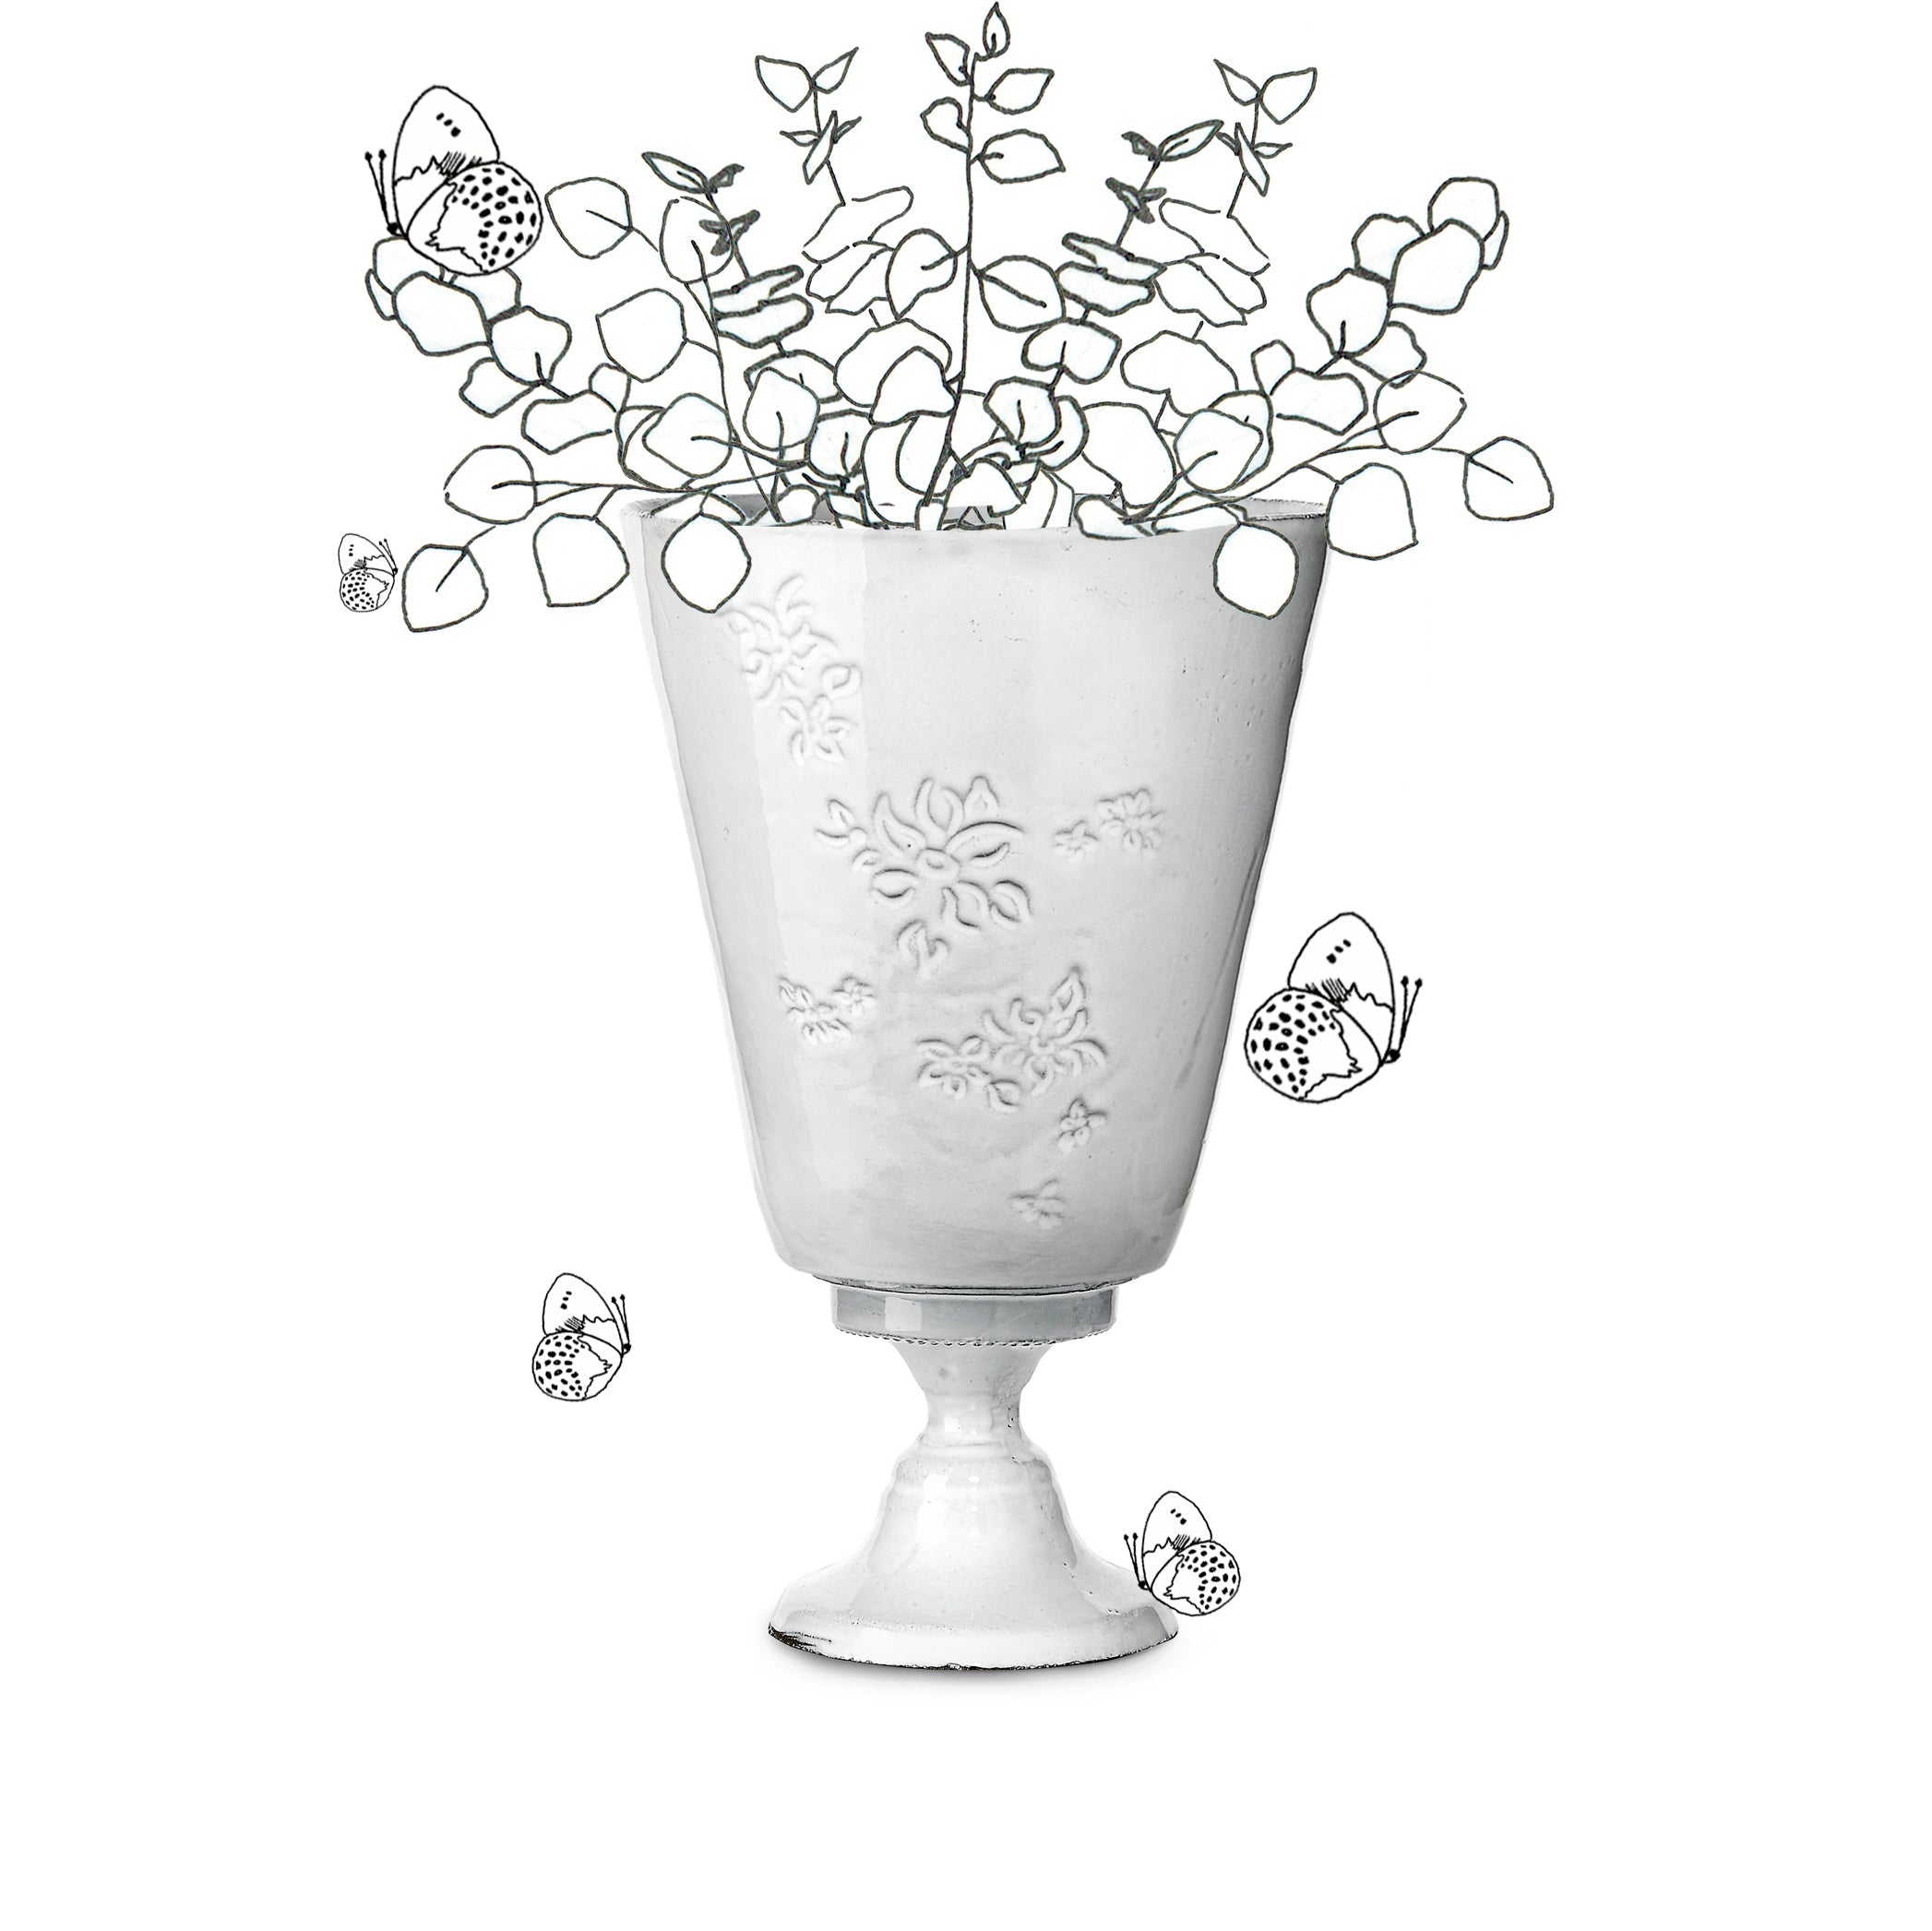 Astier de Villatte x Summerill & Bishop Vase with Falling Flower, 31cm